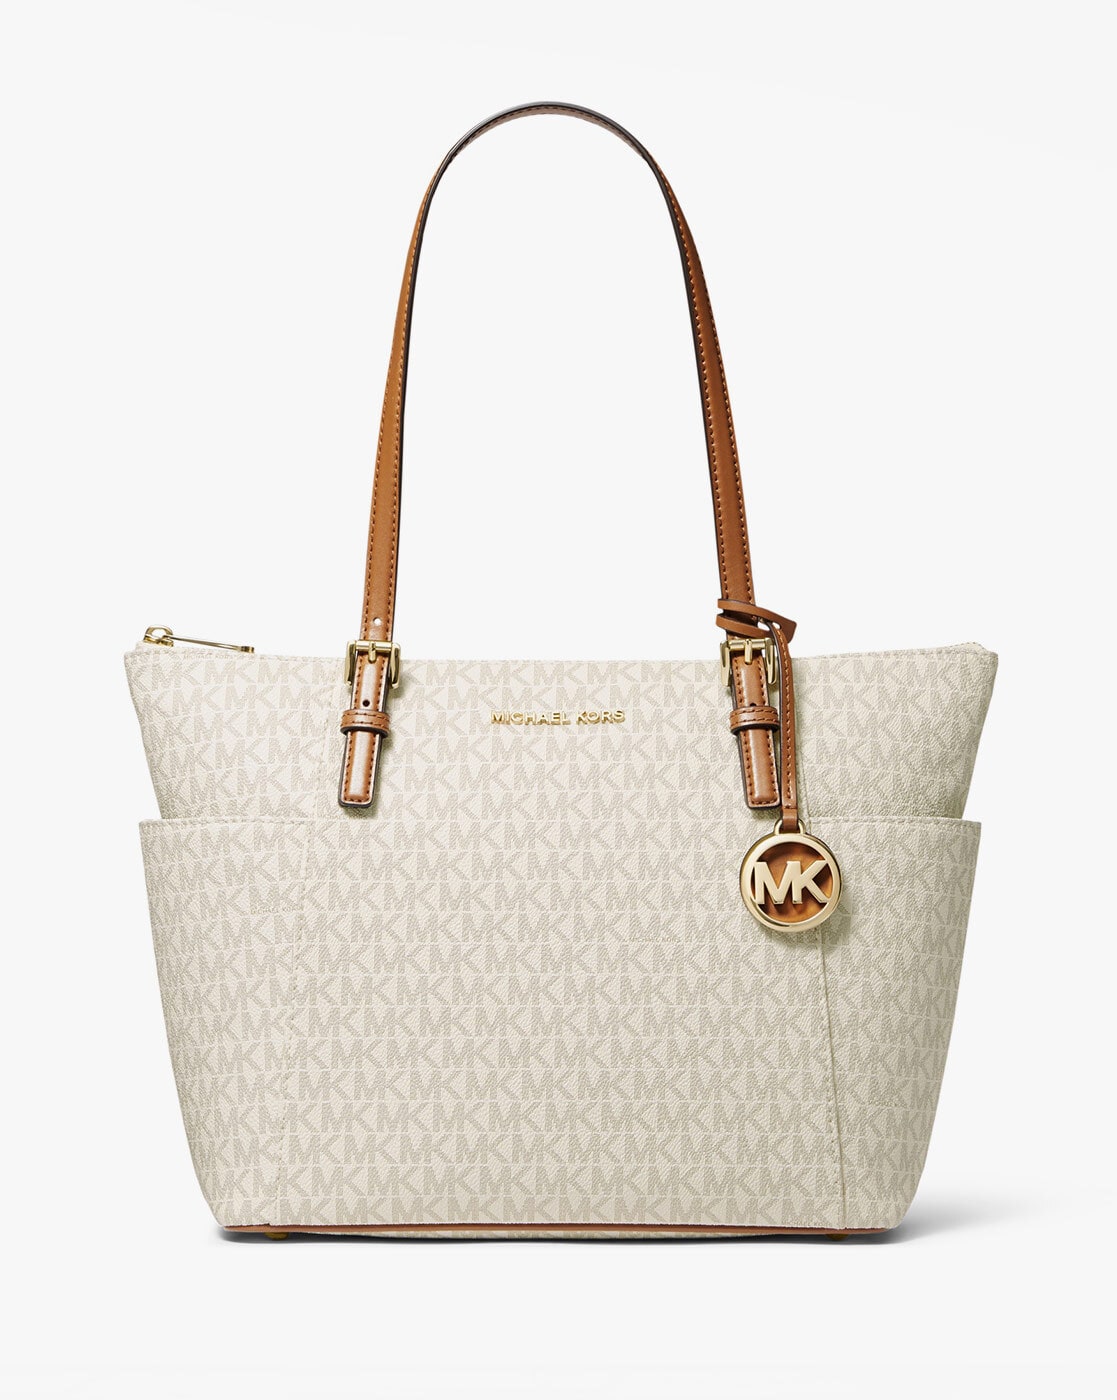 Michael Kors Handbags Department Store Editorial Photo - Image of purses,  luxurious: 52669091